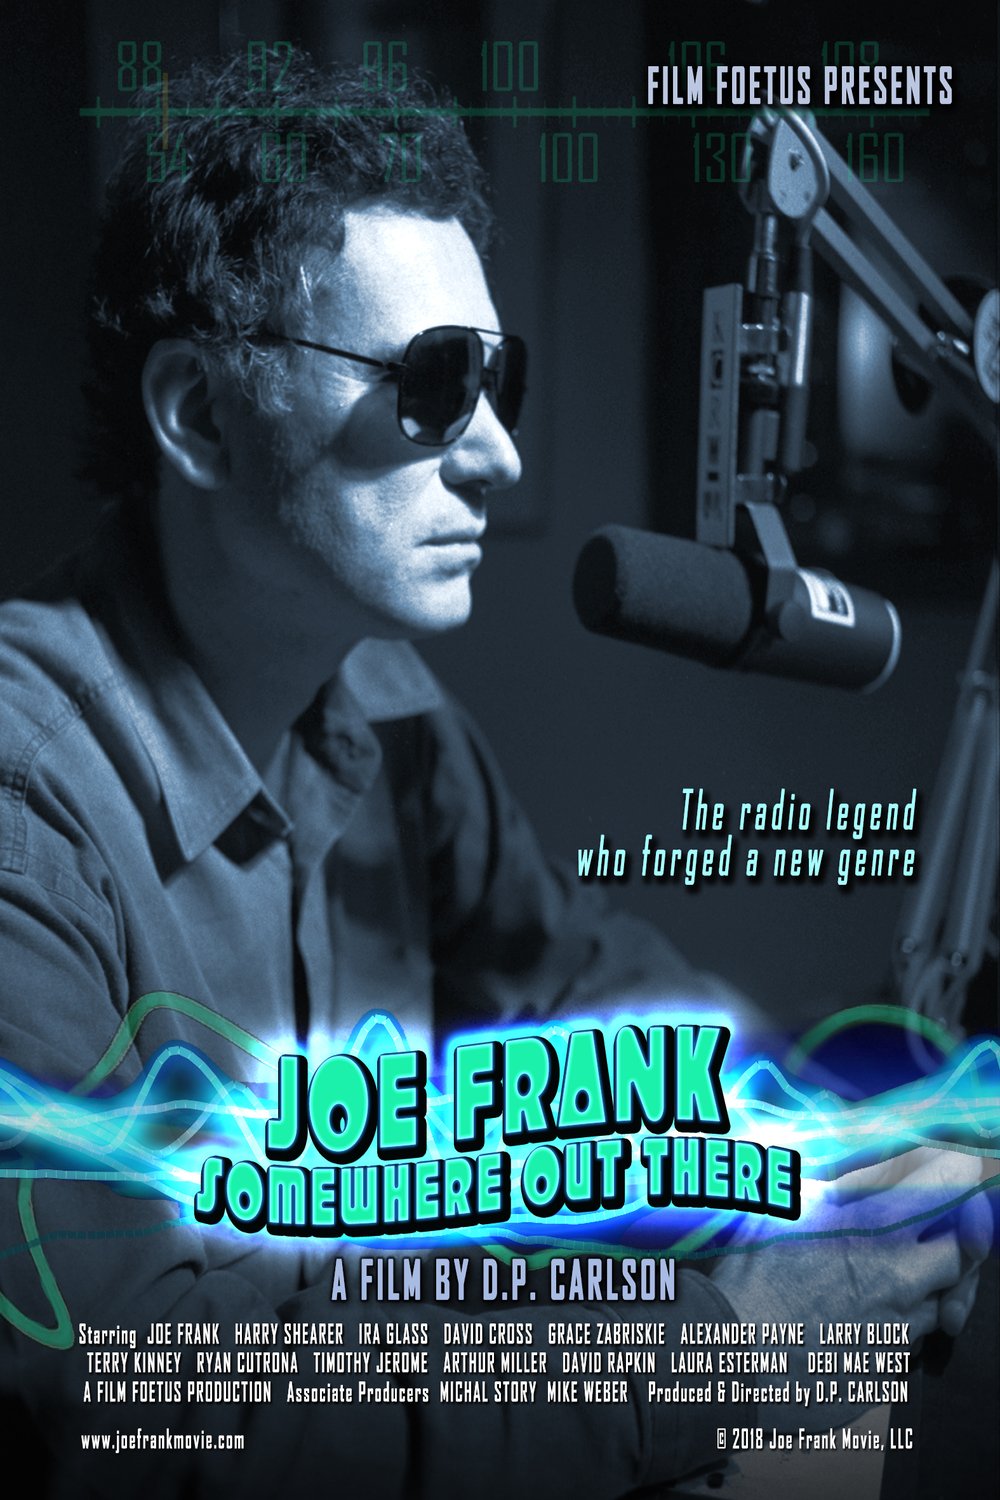 L'affiche du film Joe Frank: Somewhere Out There